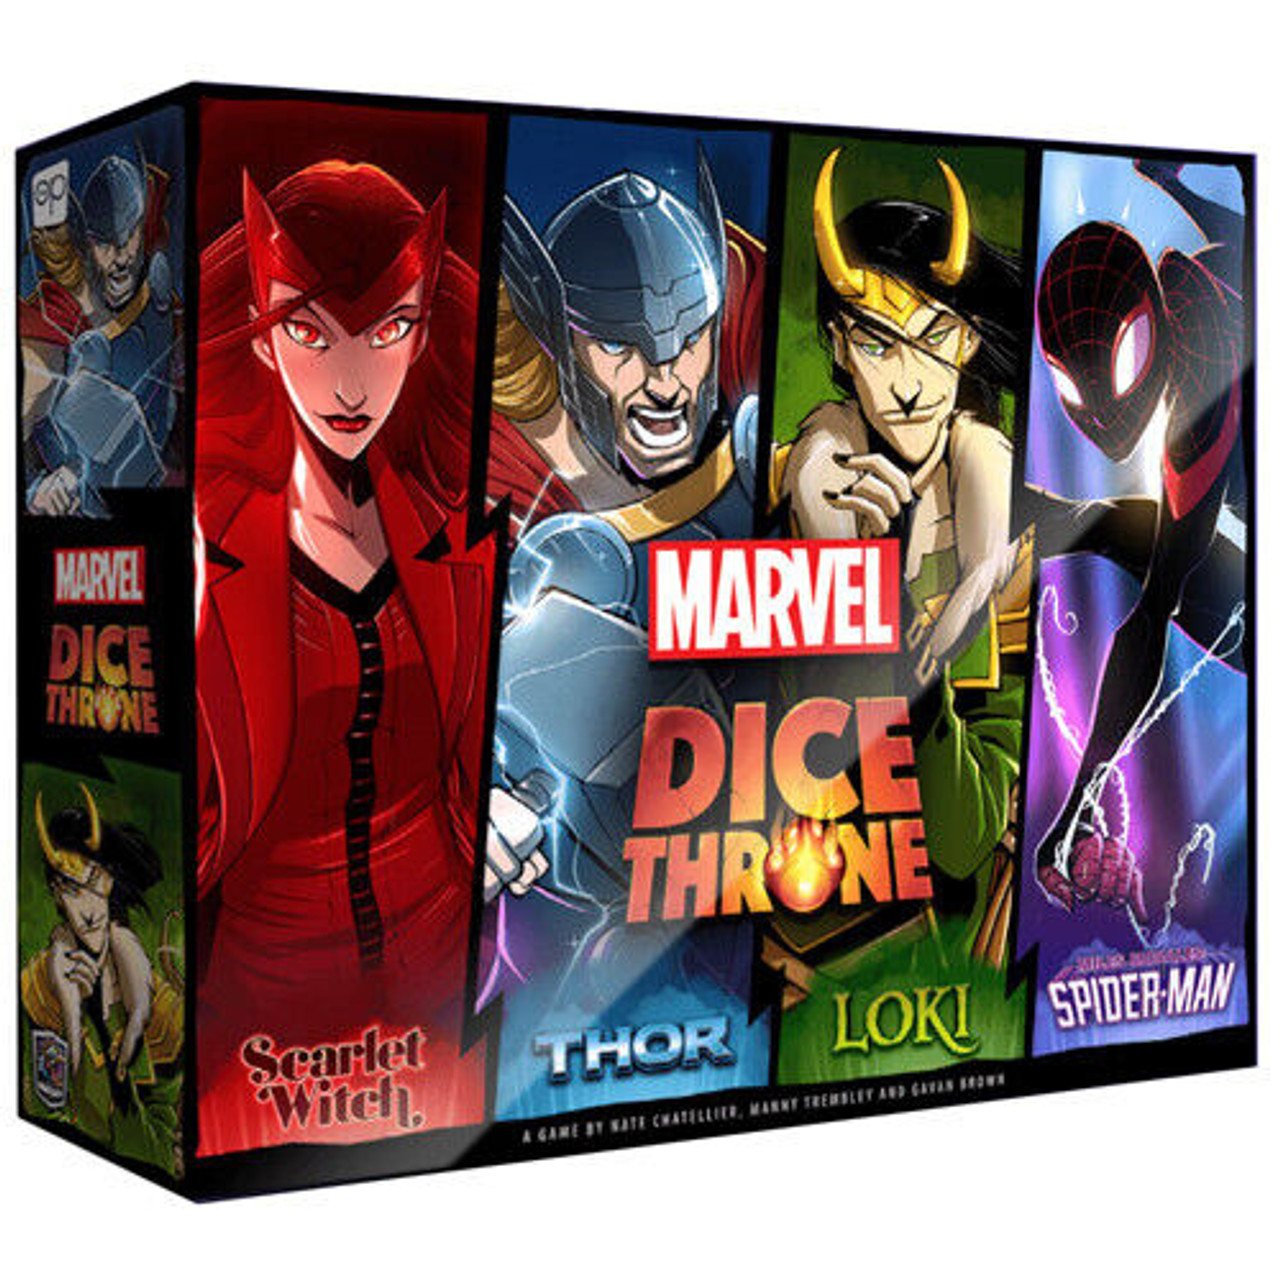 Marvel Dice Throne: 4-Hero Box (Scarlet Witch, Thor, Loki, & Spider-Man) -=NEW=-